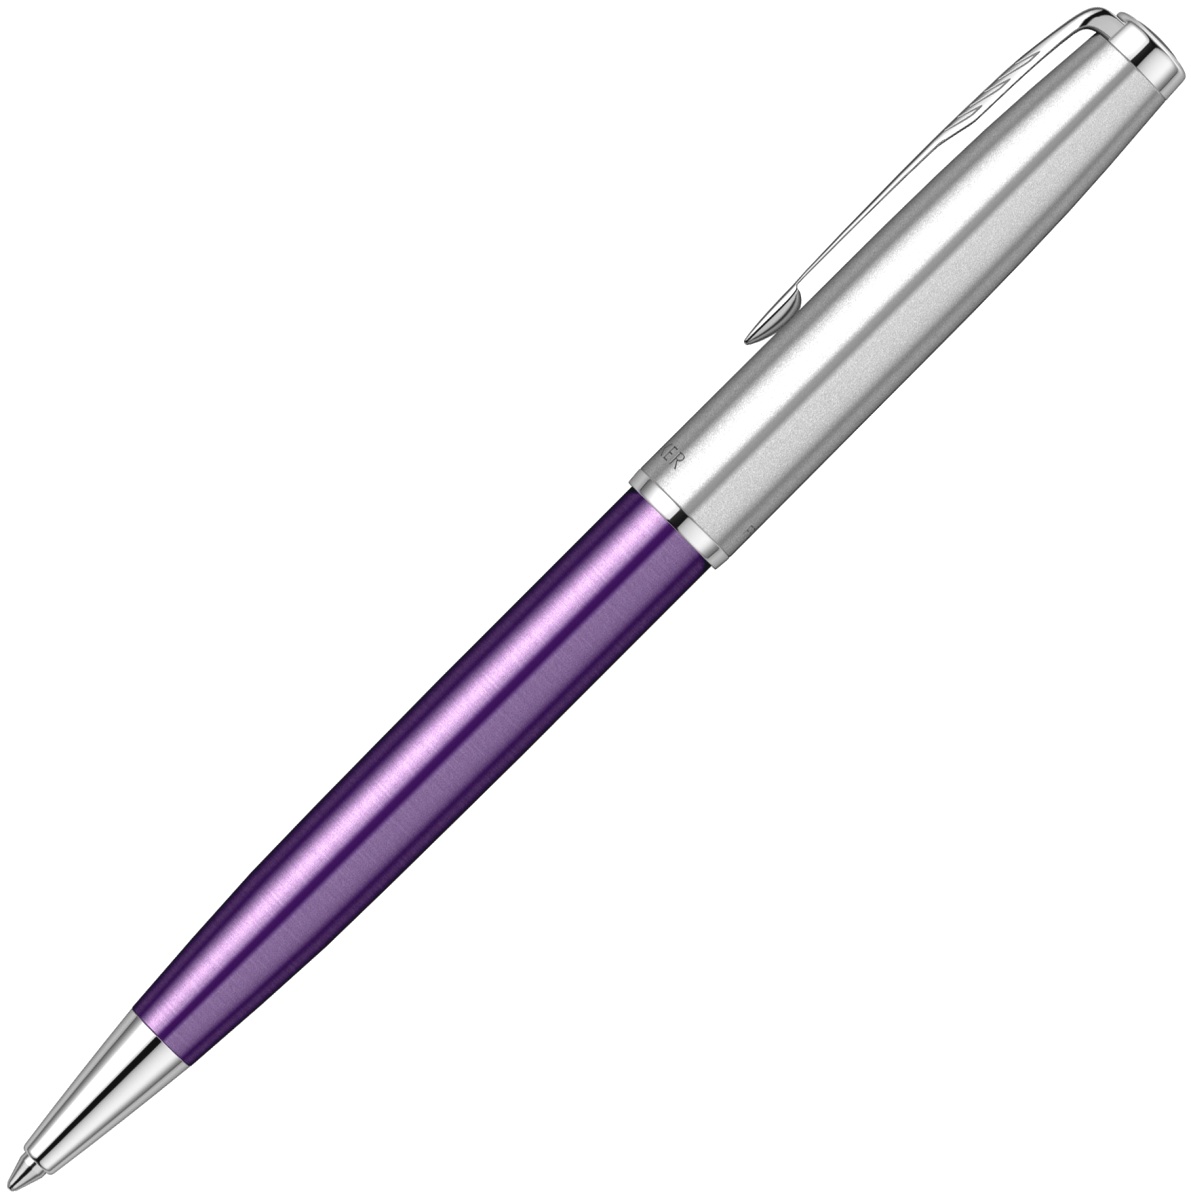  Ручка шариковая Parker Sonnet Essential SB K545, Violet CT, фото 2